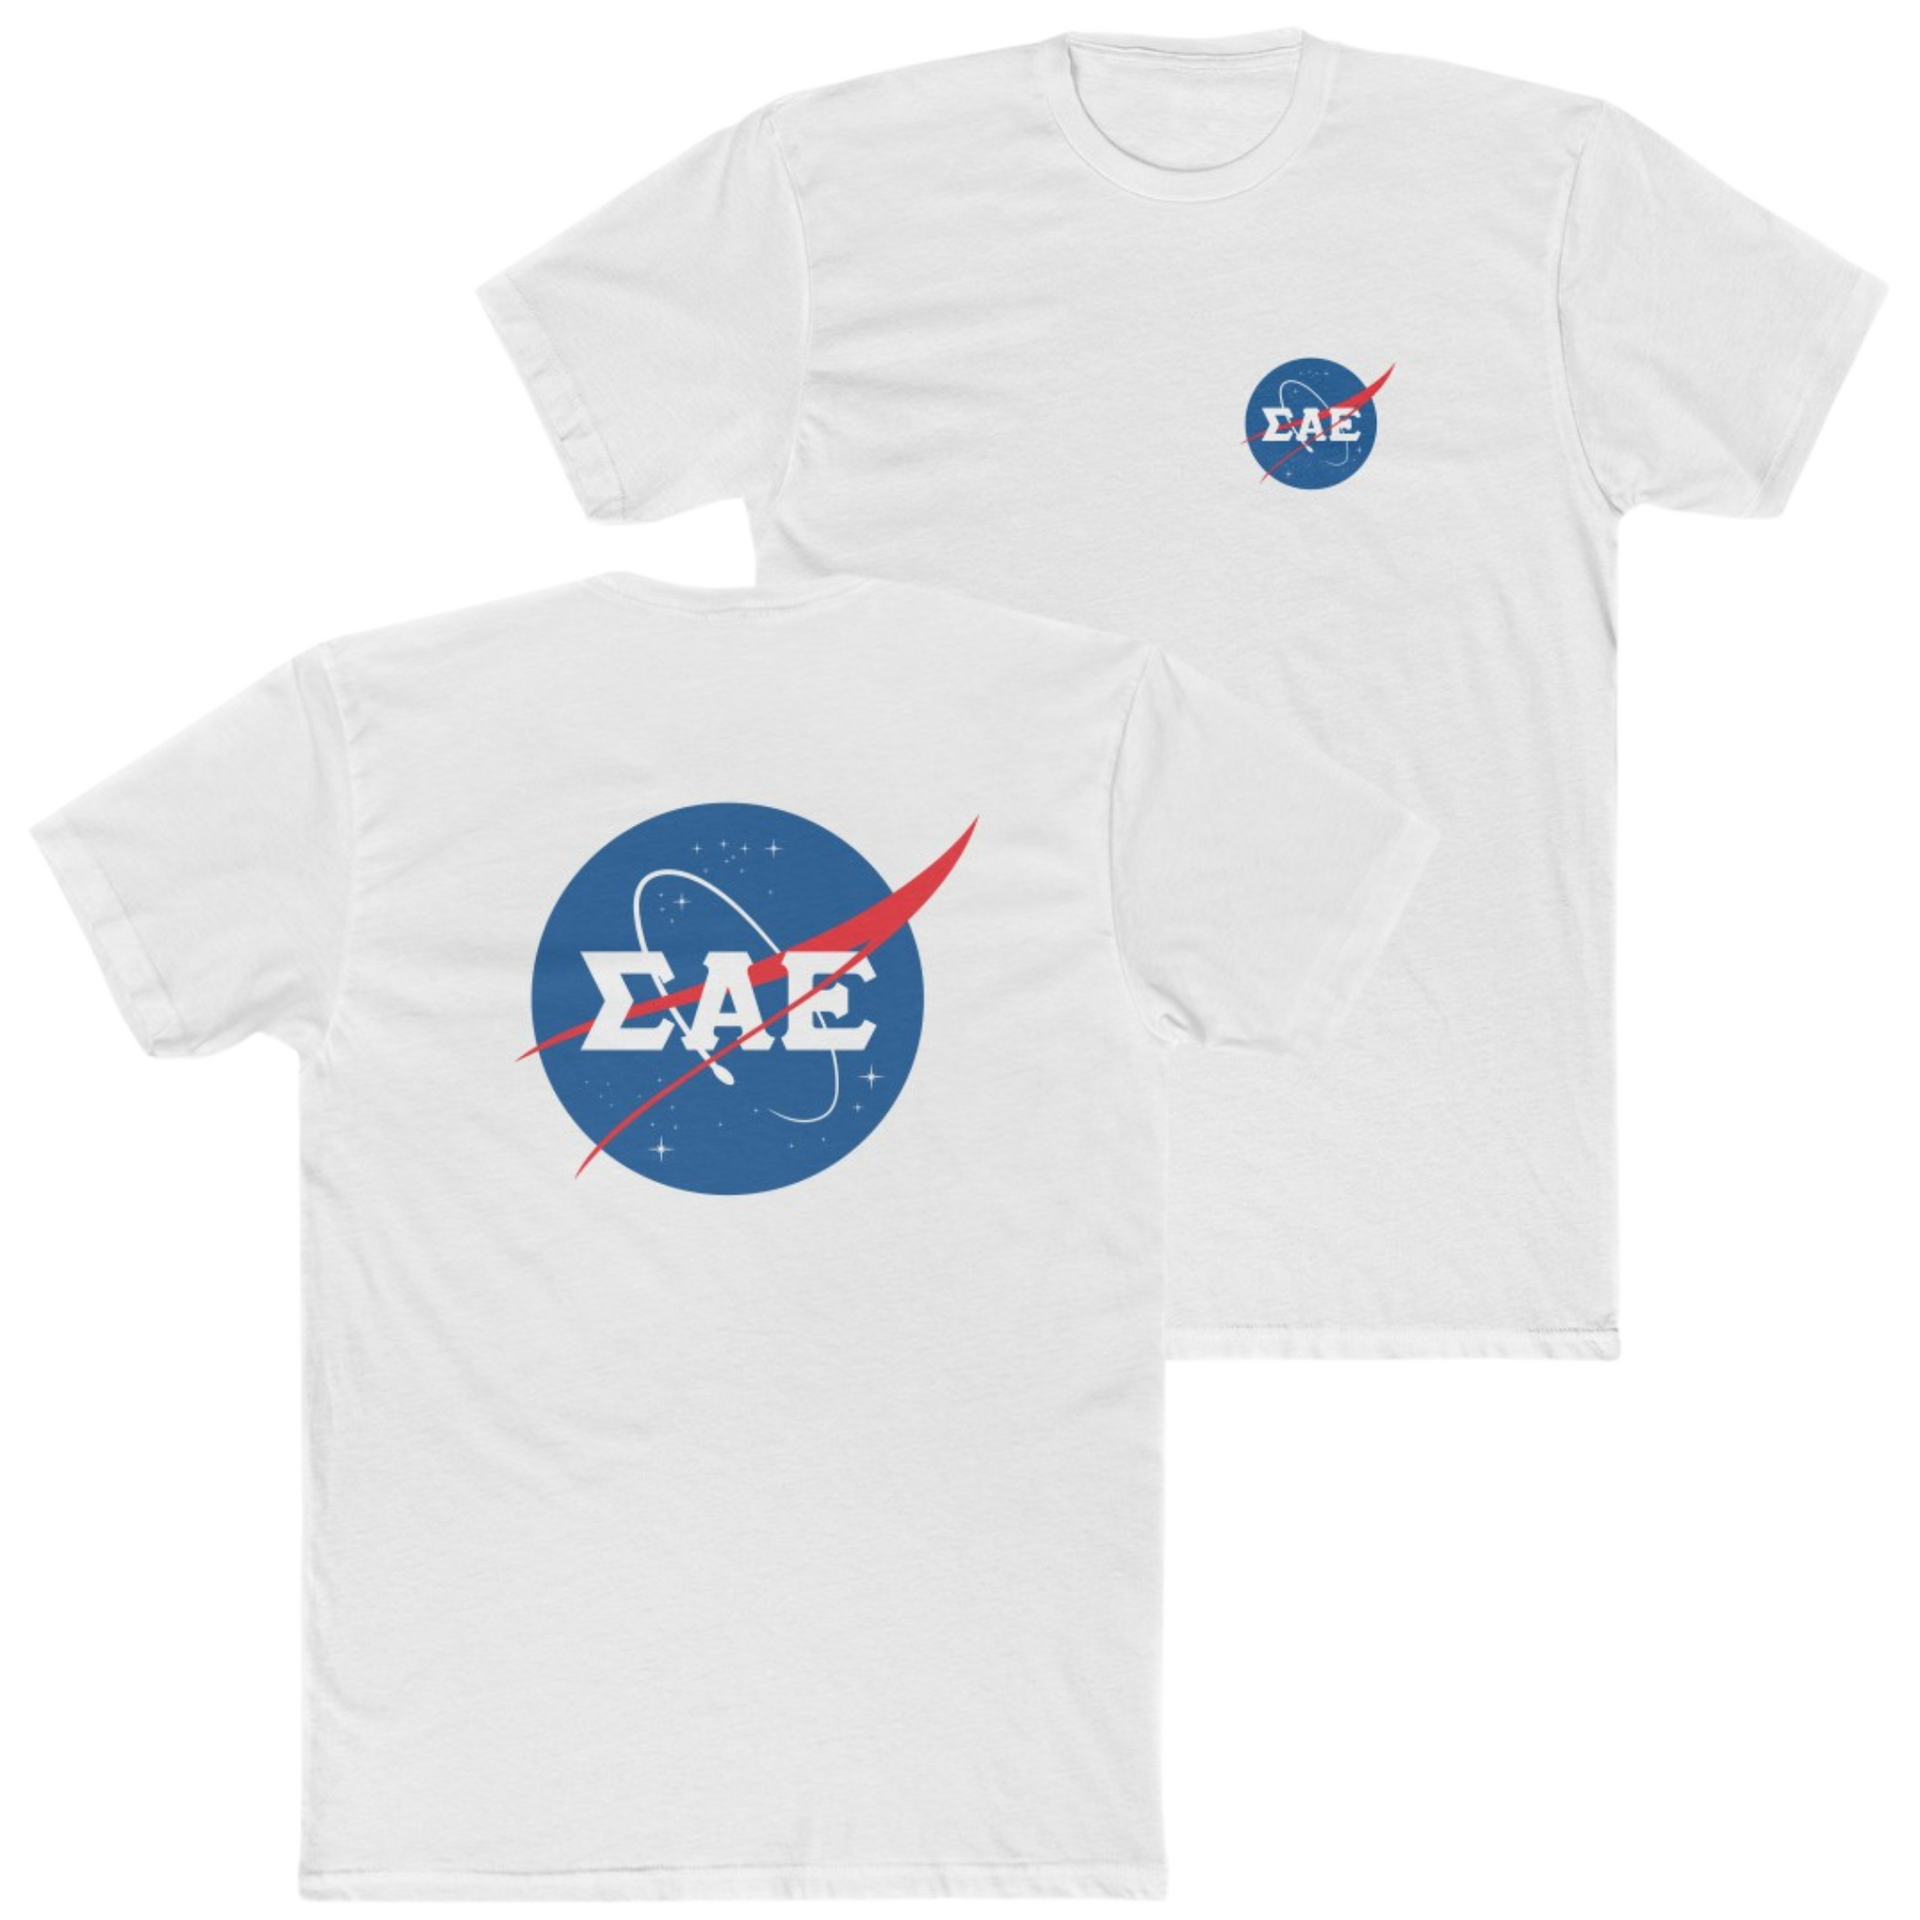 White Sigma Alpha Epsilon Graphic T-Shirt | Nasa 2.0 | Sigma Alpha Epsilon Clothing and Merchandise